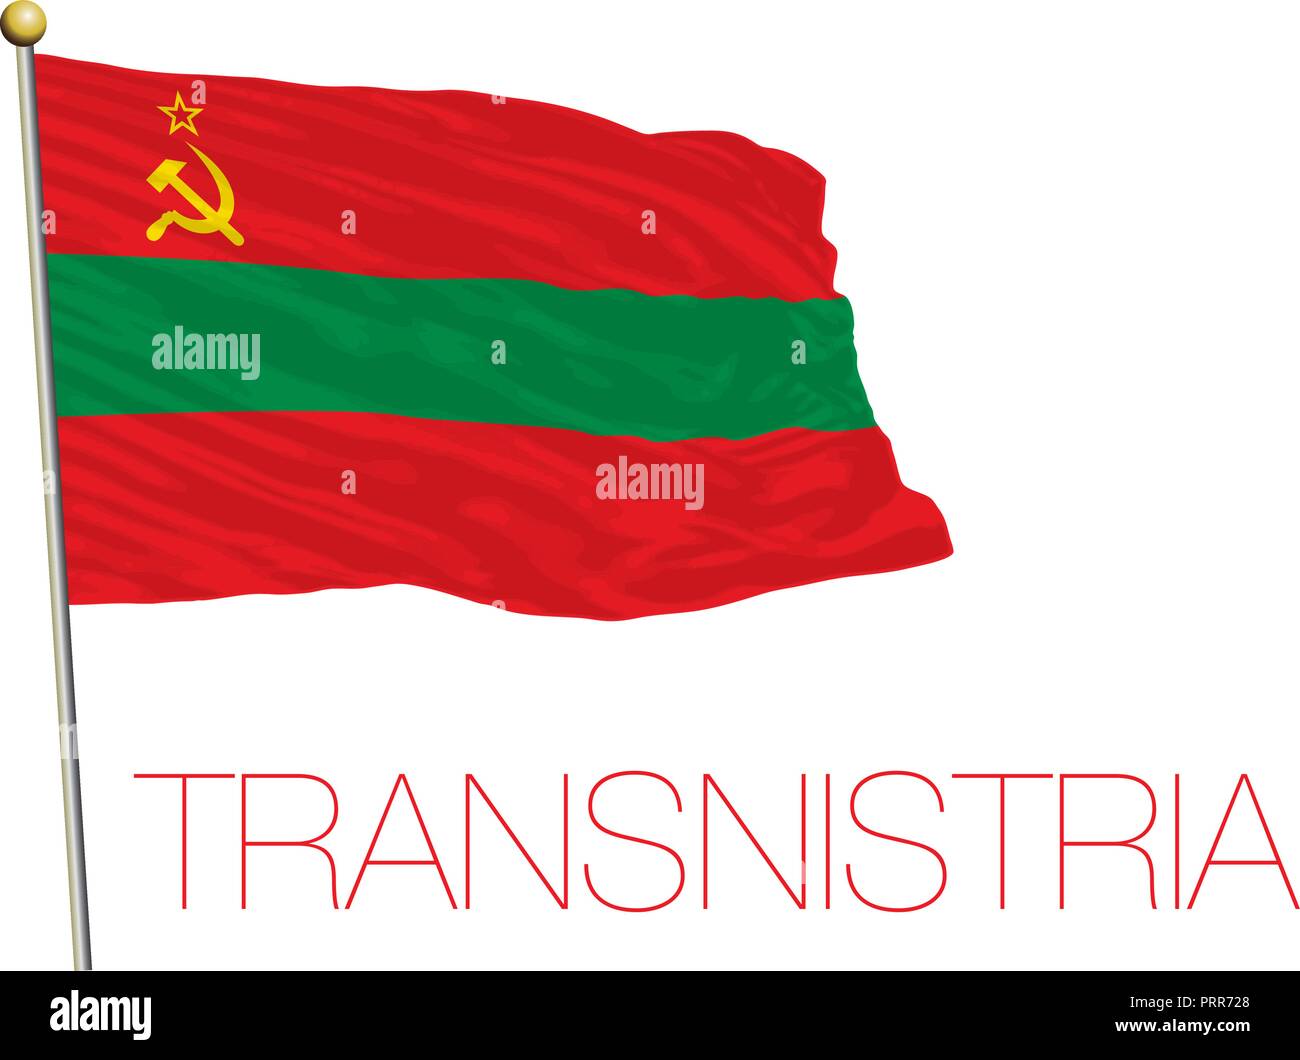 Transnistria official flag, vector illustration Stock Vector